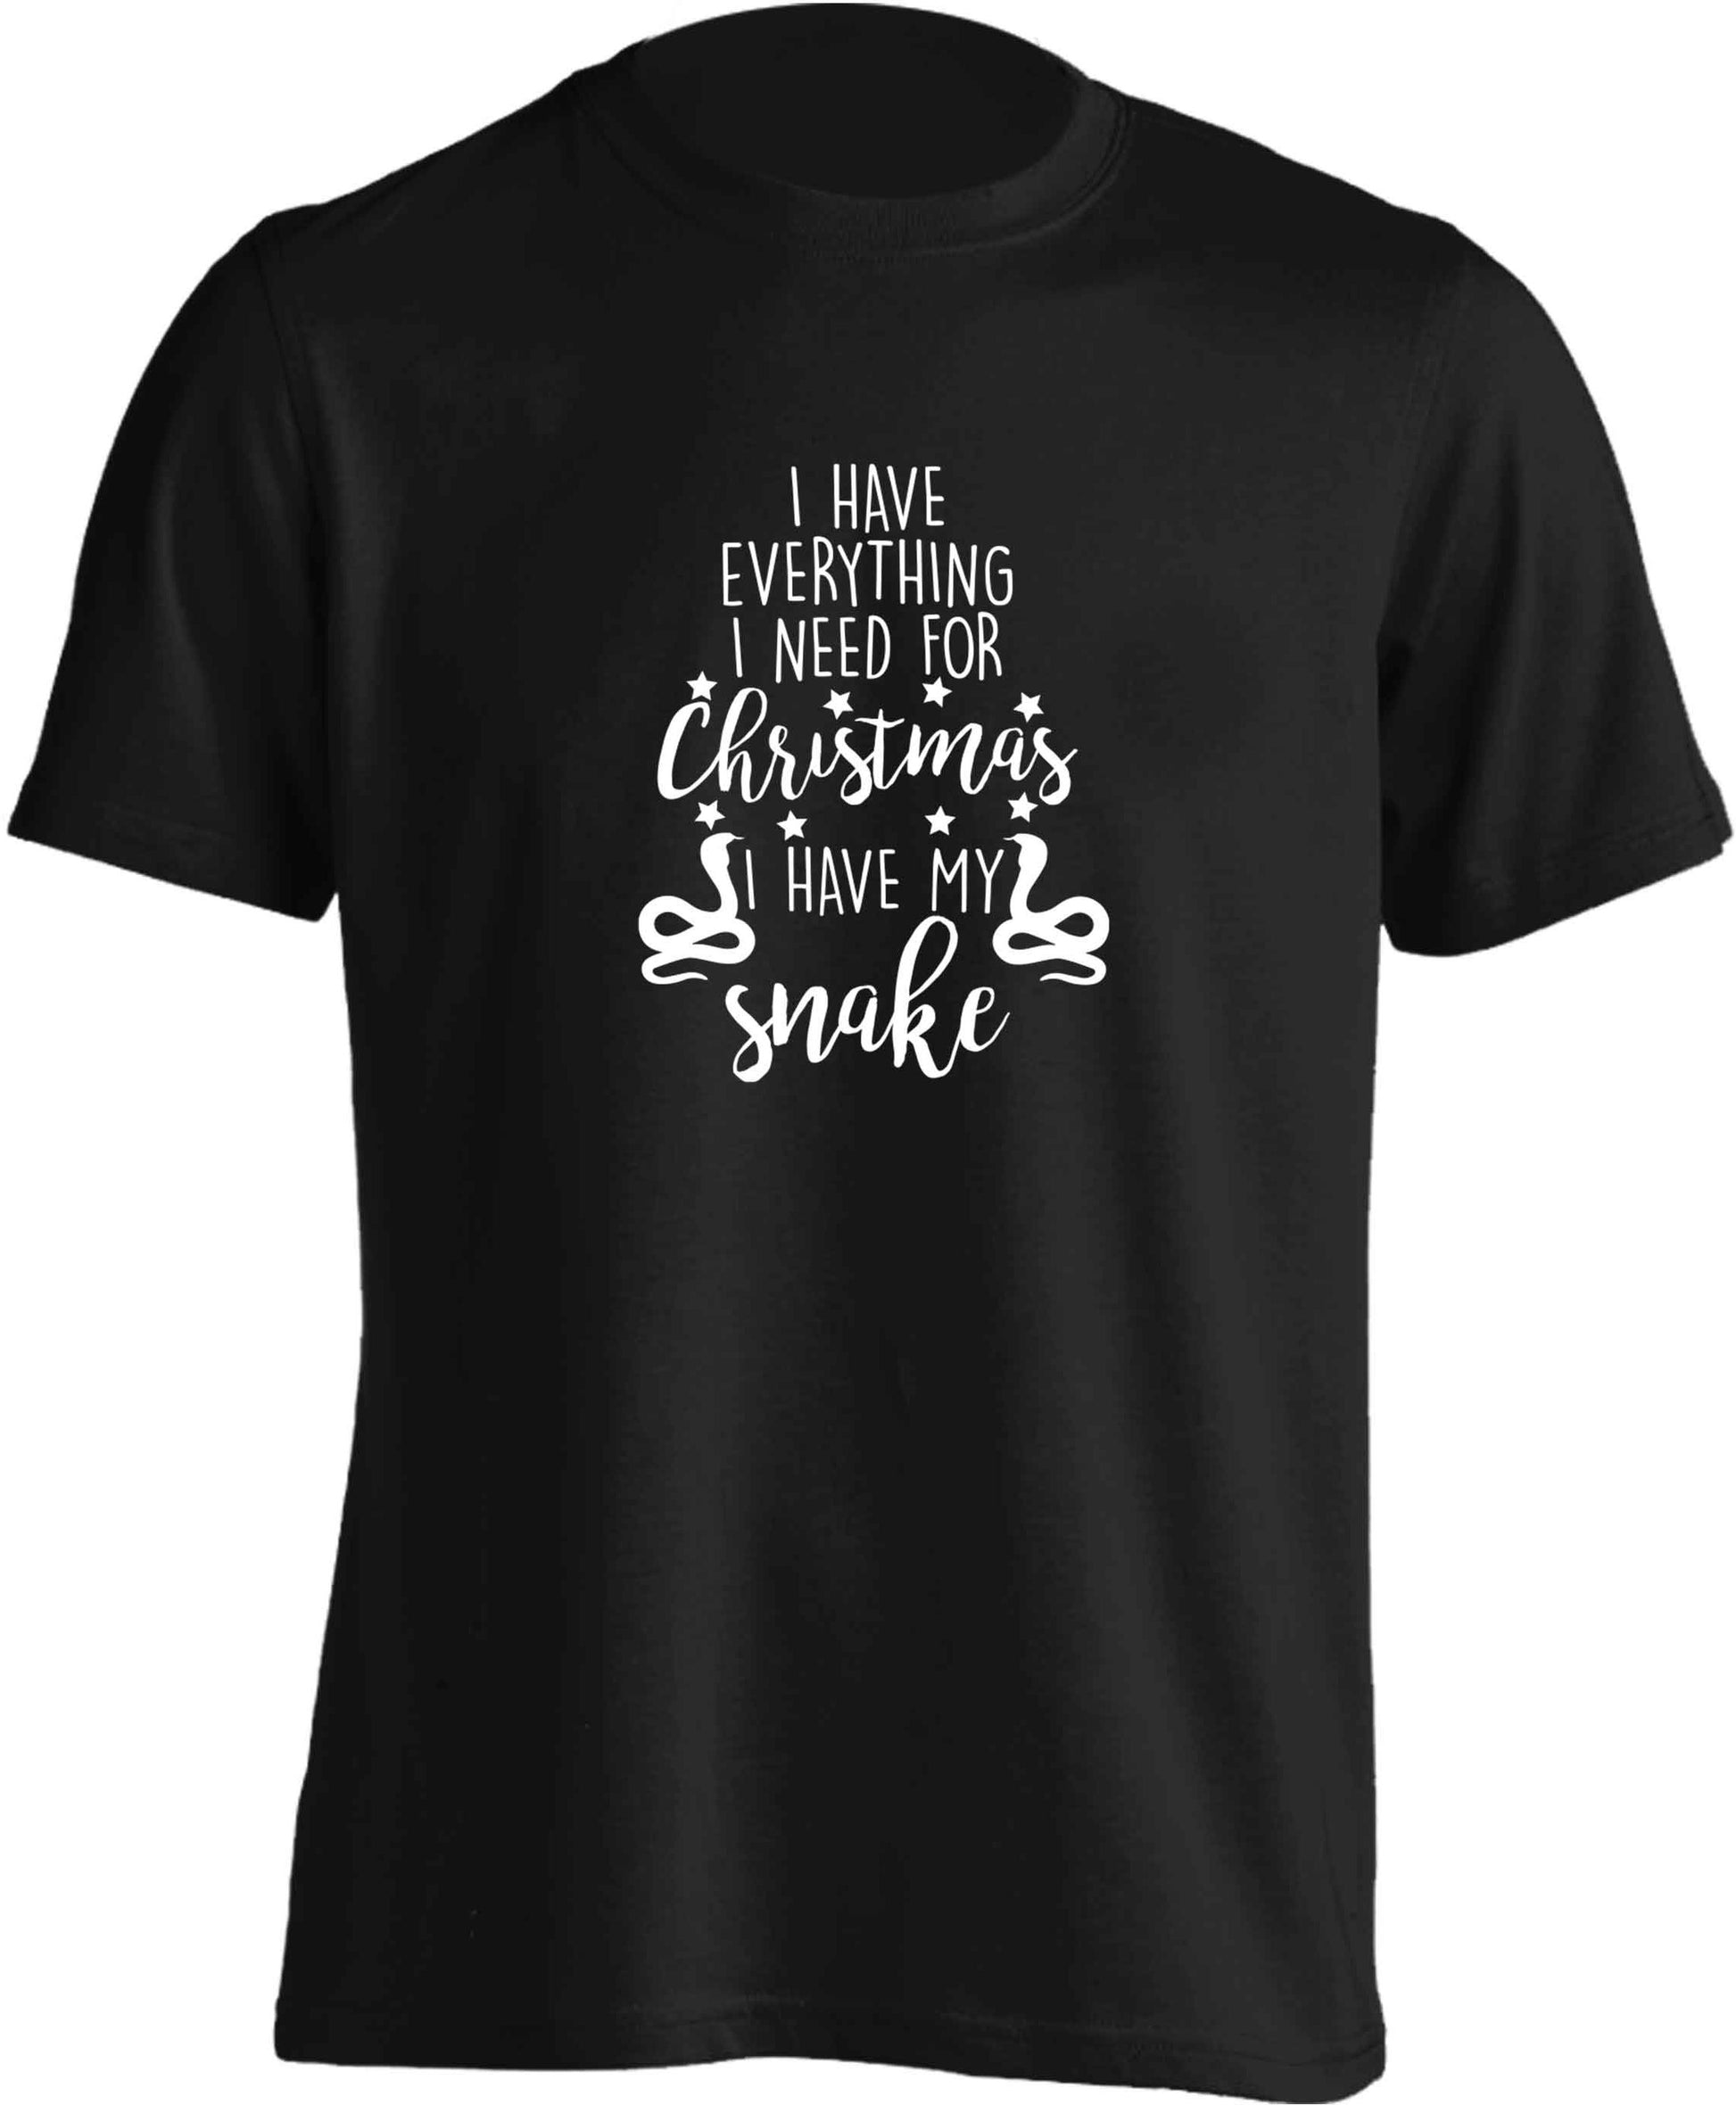 I have everything I need for Christmas I have my snake adults unisex black Tshirt 2XL